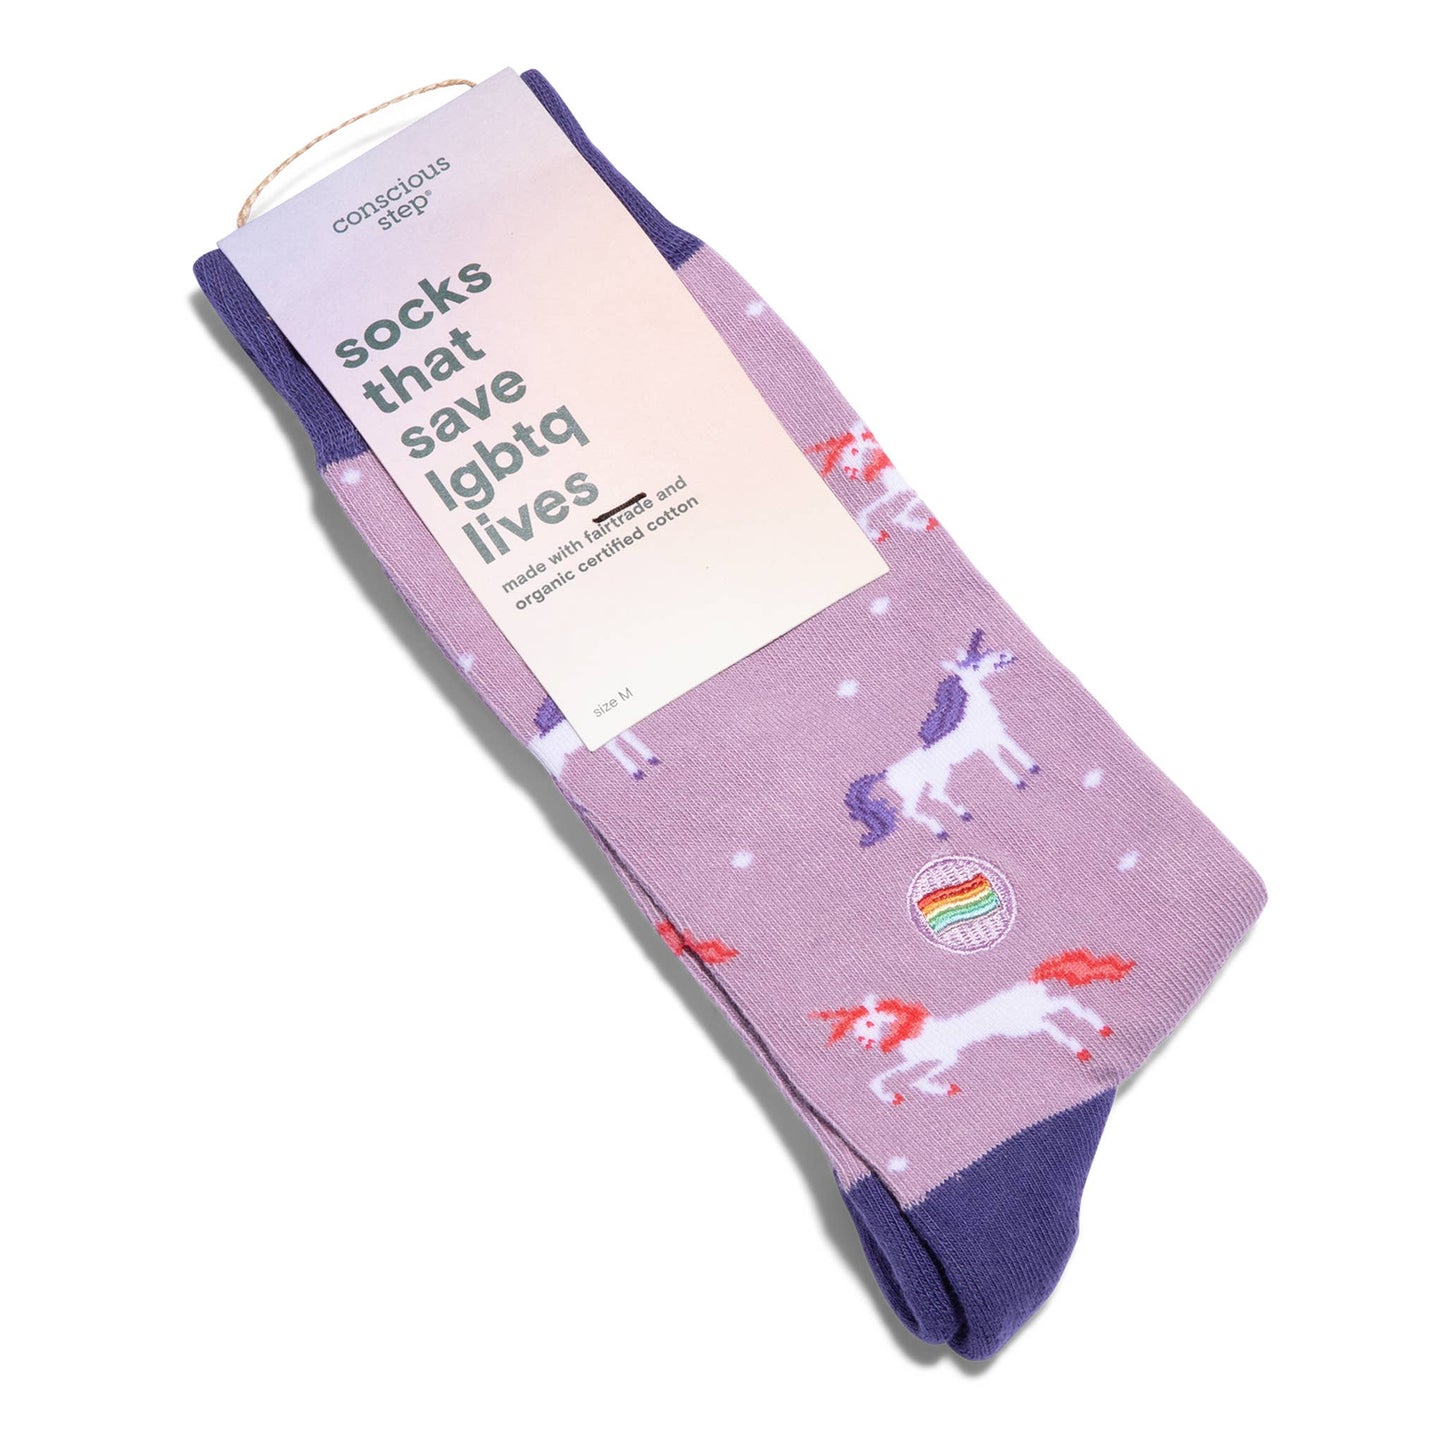 Socks that Save LGBTQ Lives (Purple Unicorns): Medium